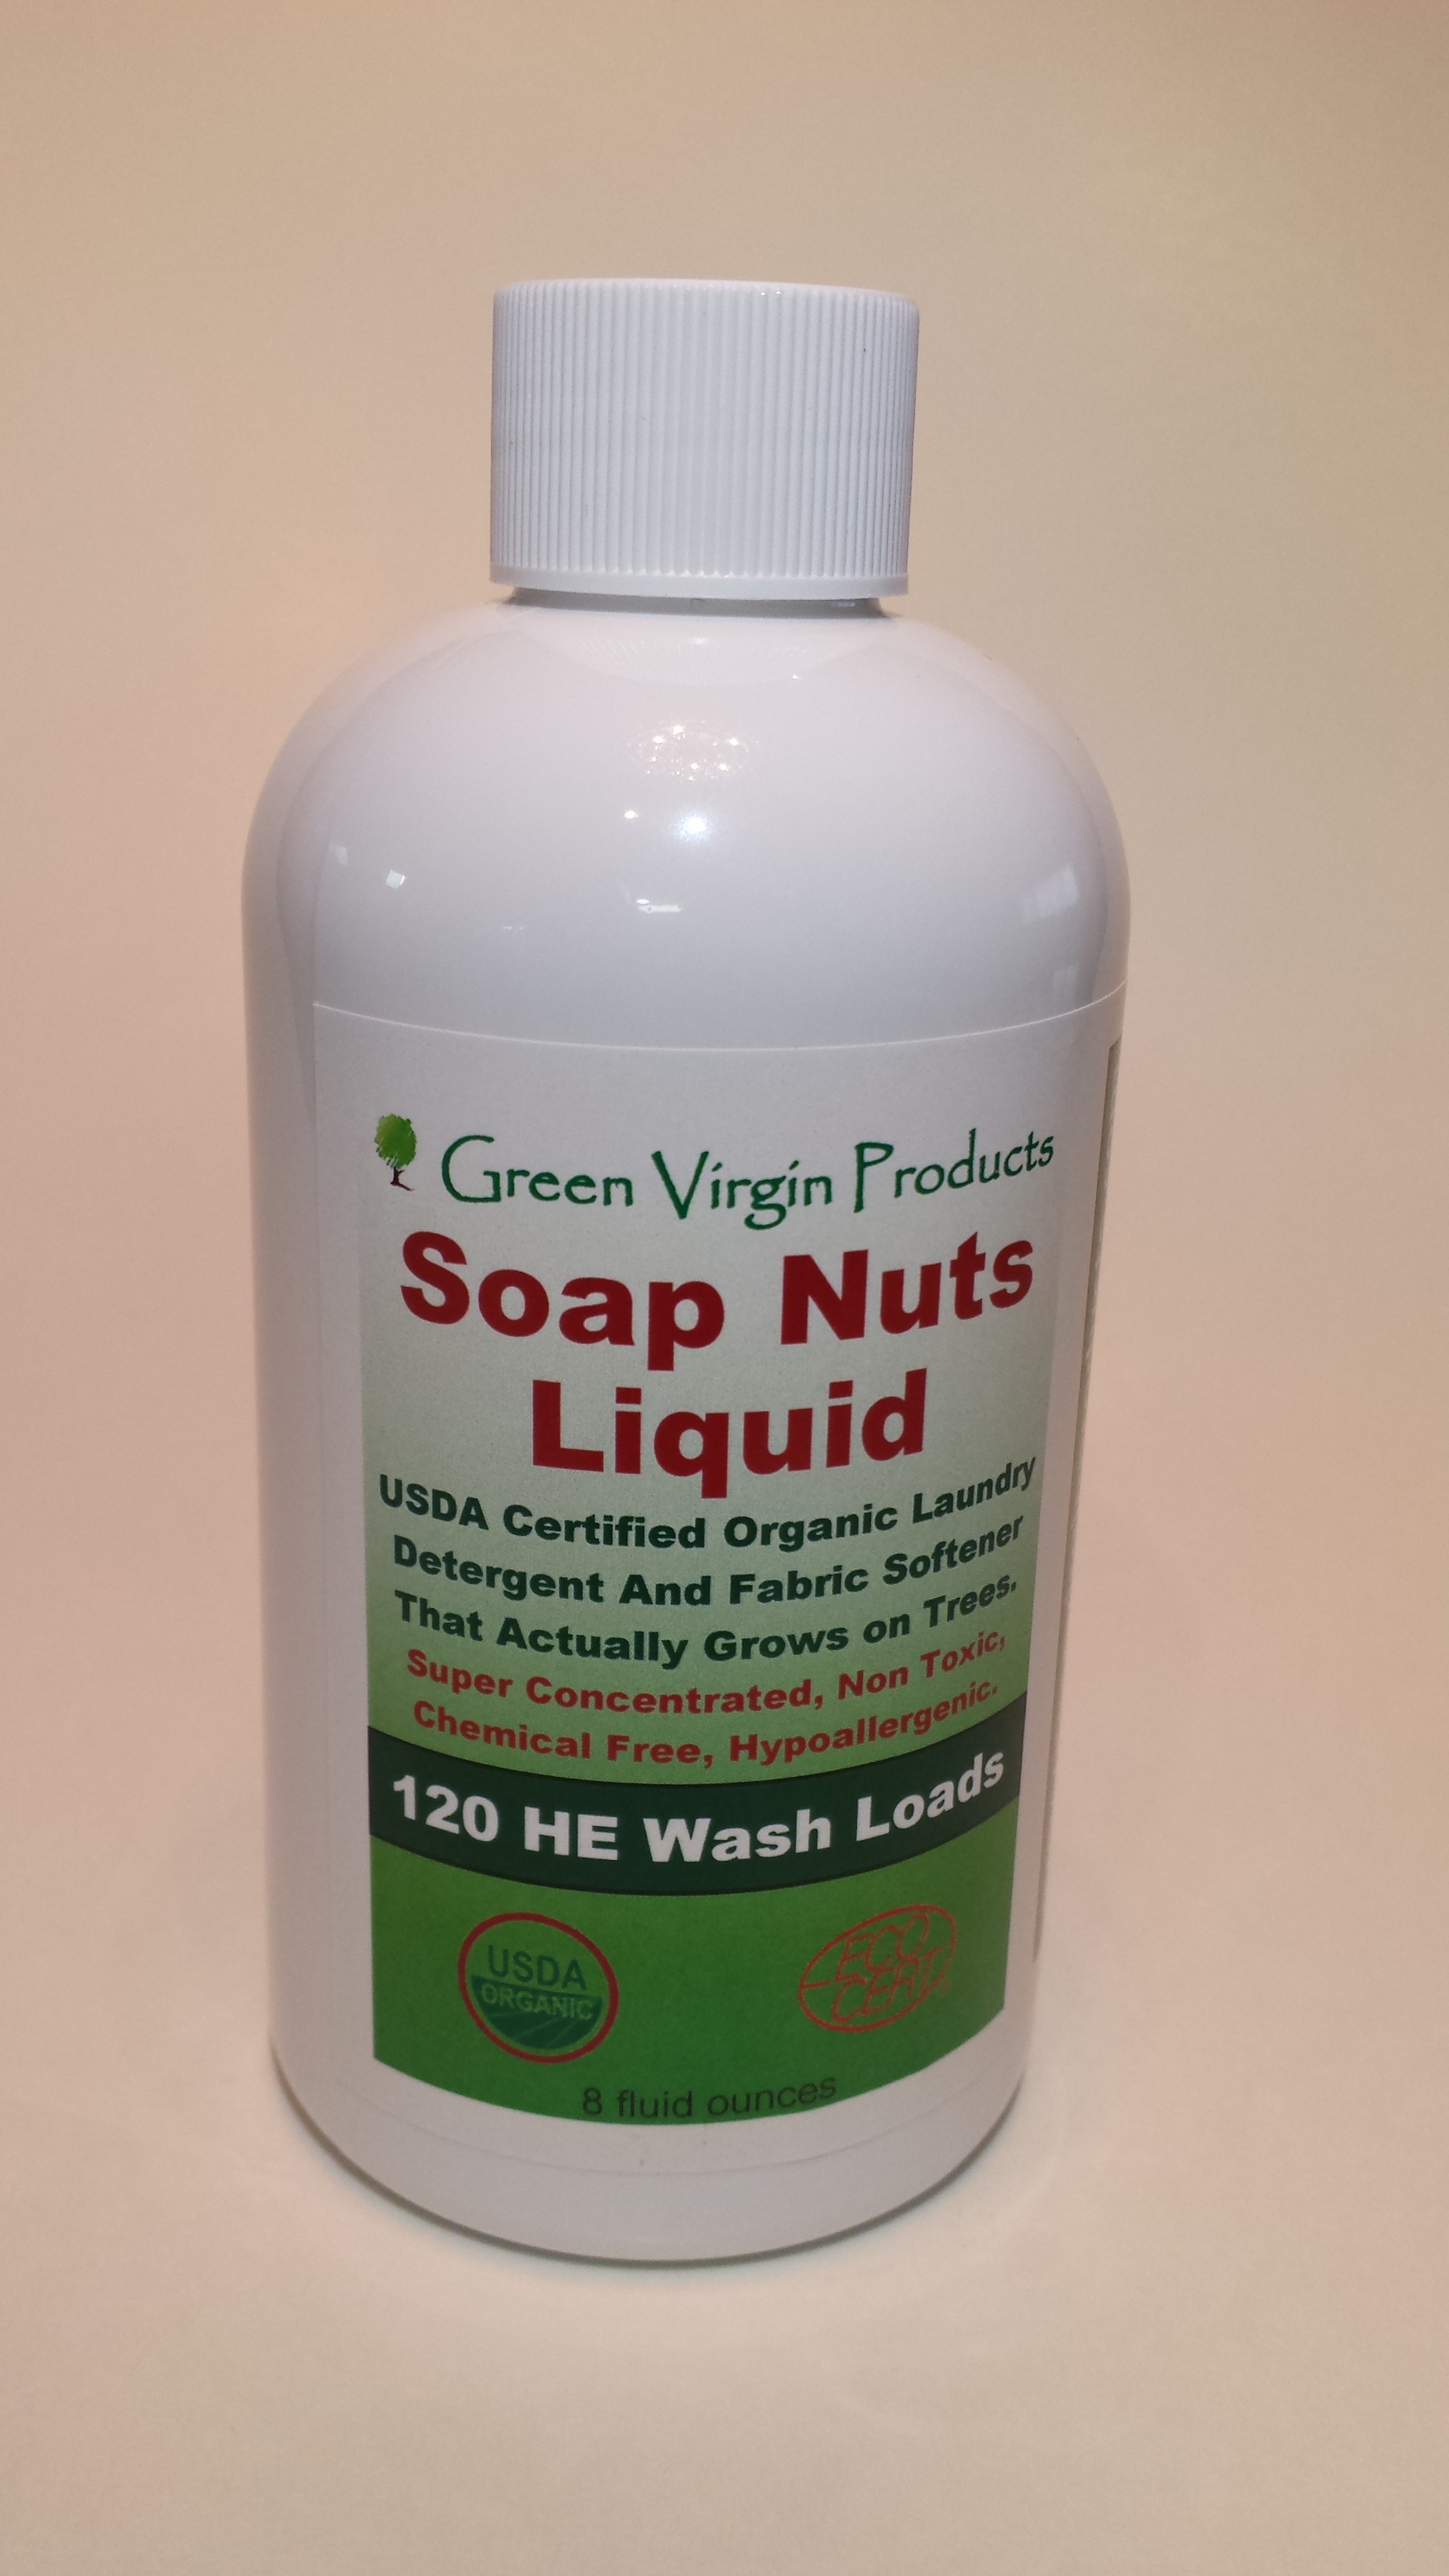 soap nuts liquid for $18.95 and lasts 120 loads via genpink.com